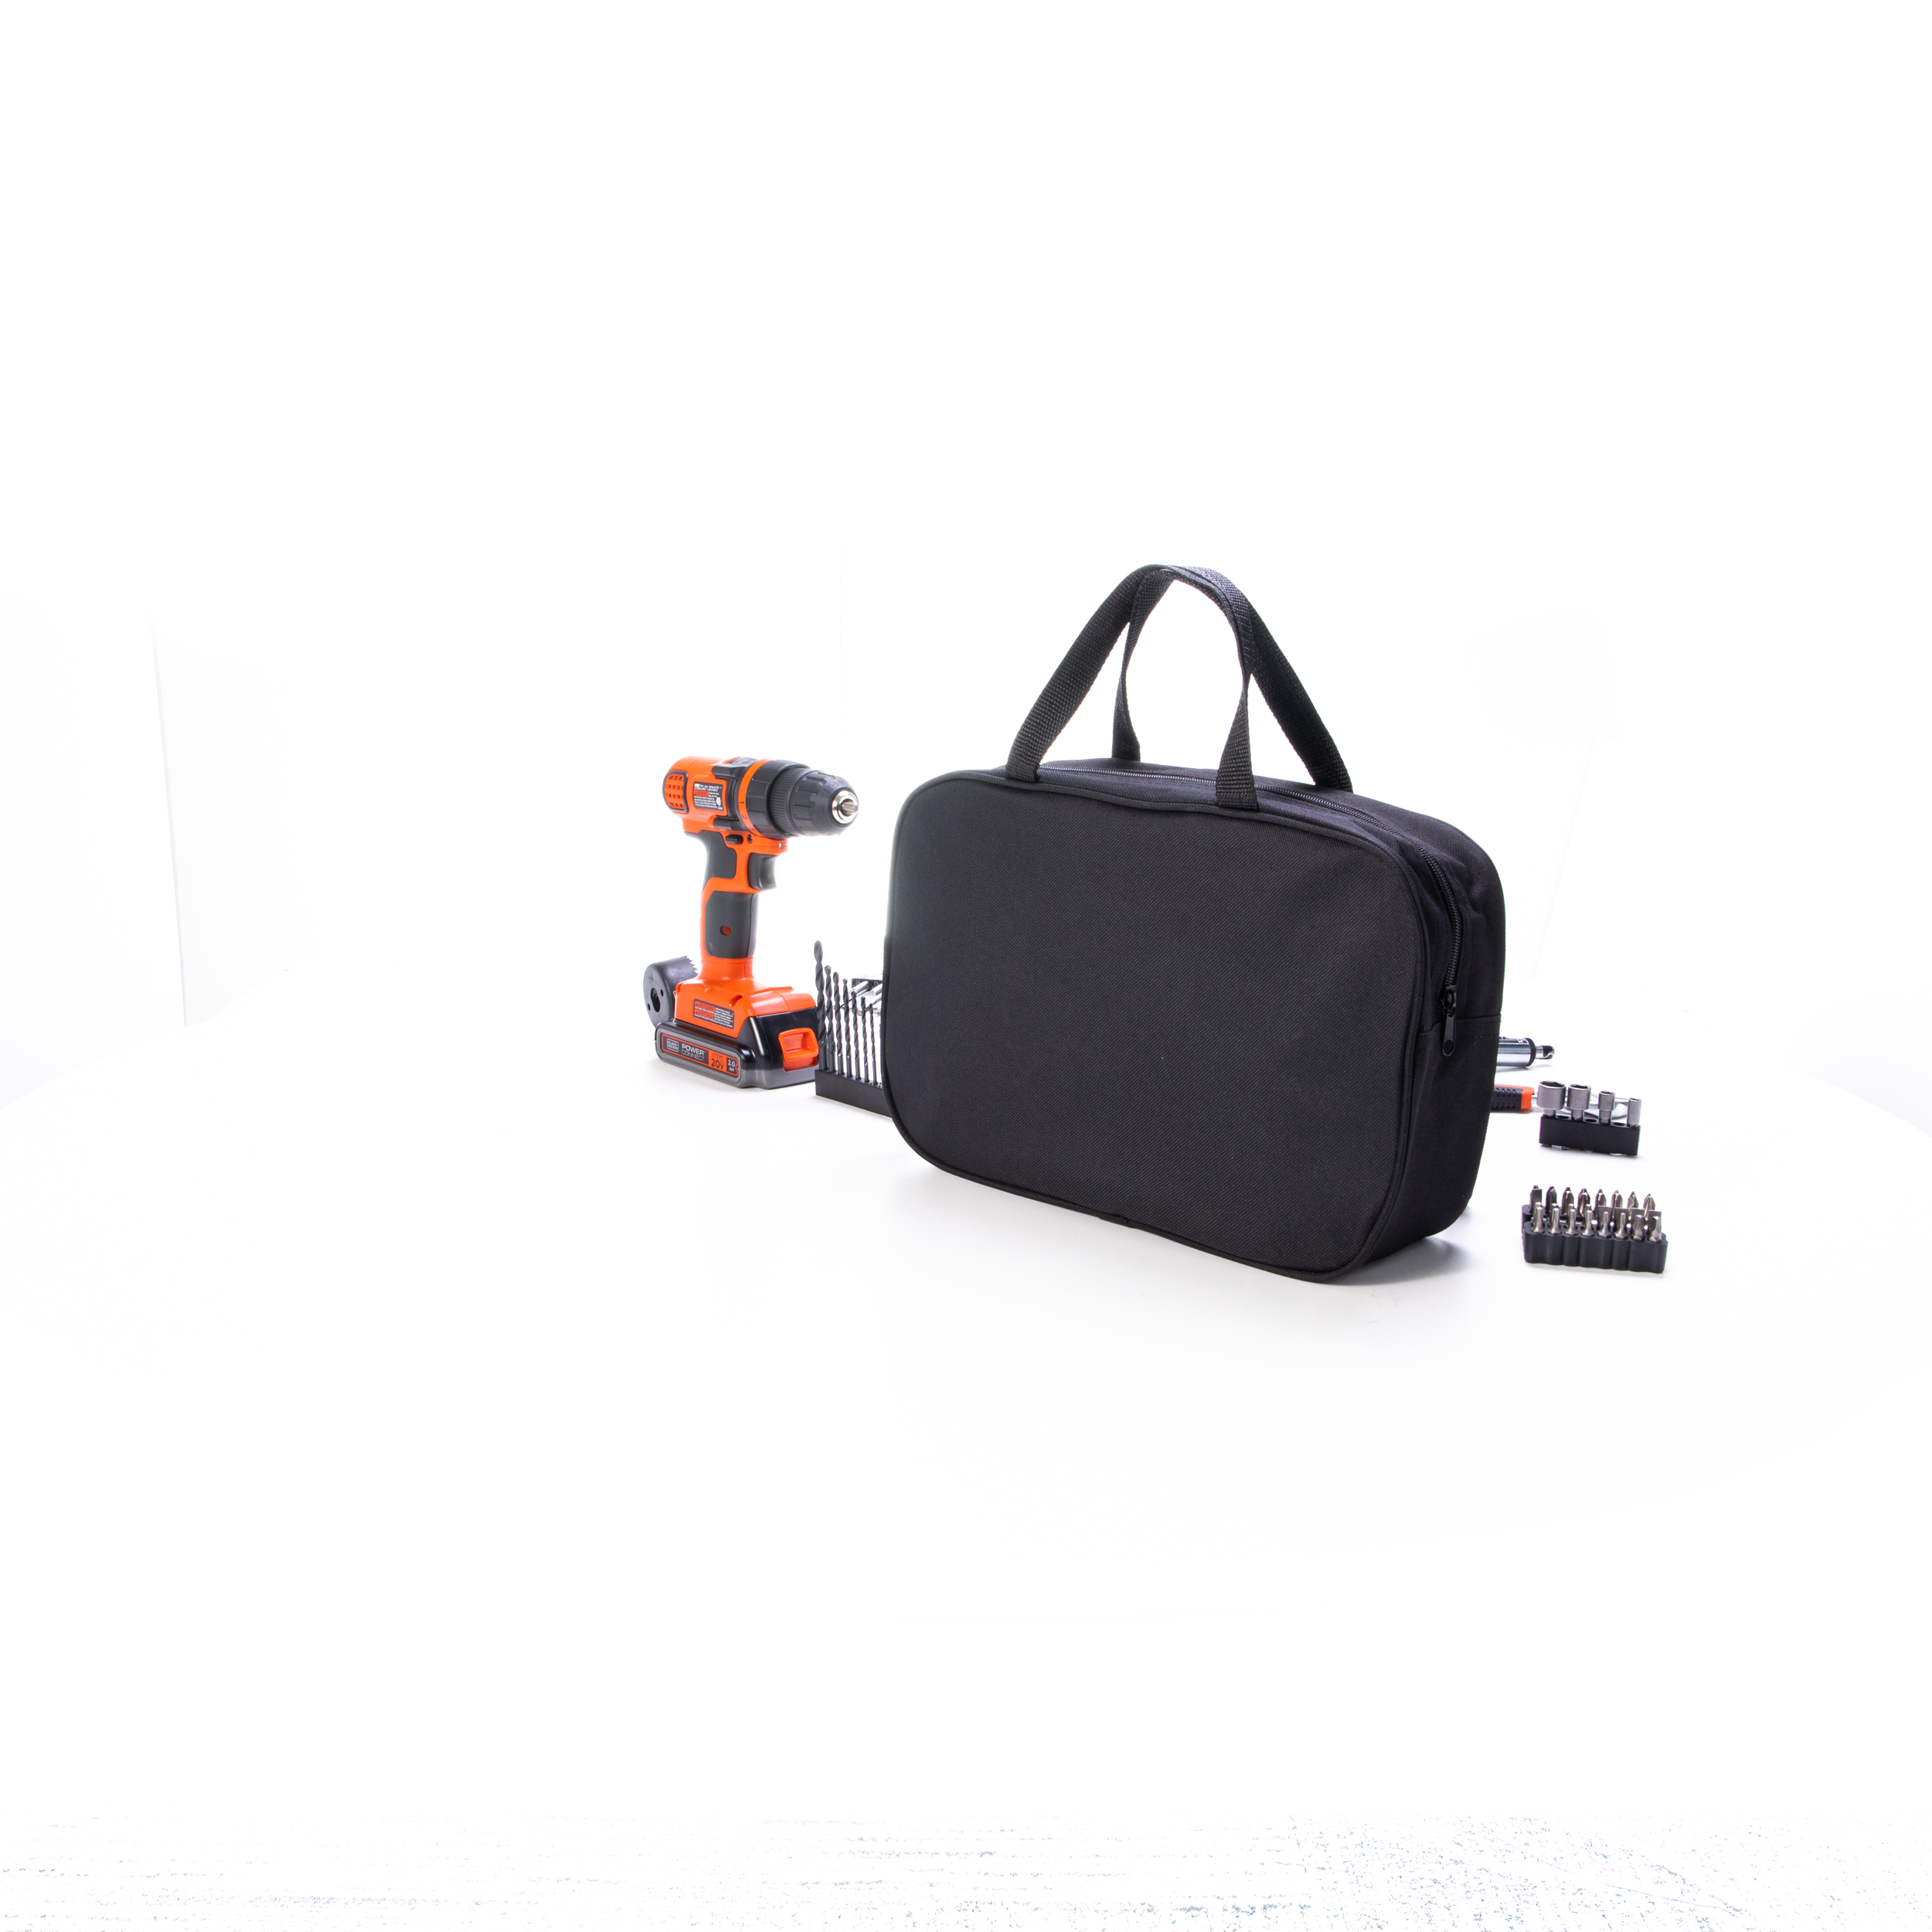 BLACK+DECKER LDX120PK 68-Piece Project Kit 20V Cordless Drill with Hard Case  - Black/Orange 